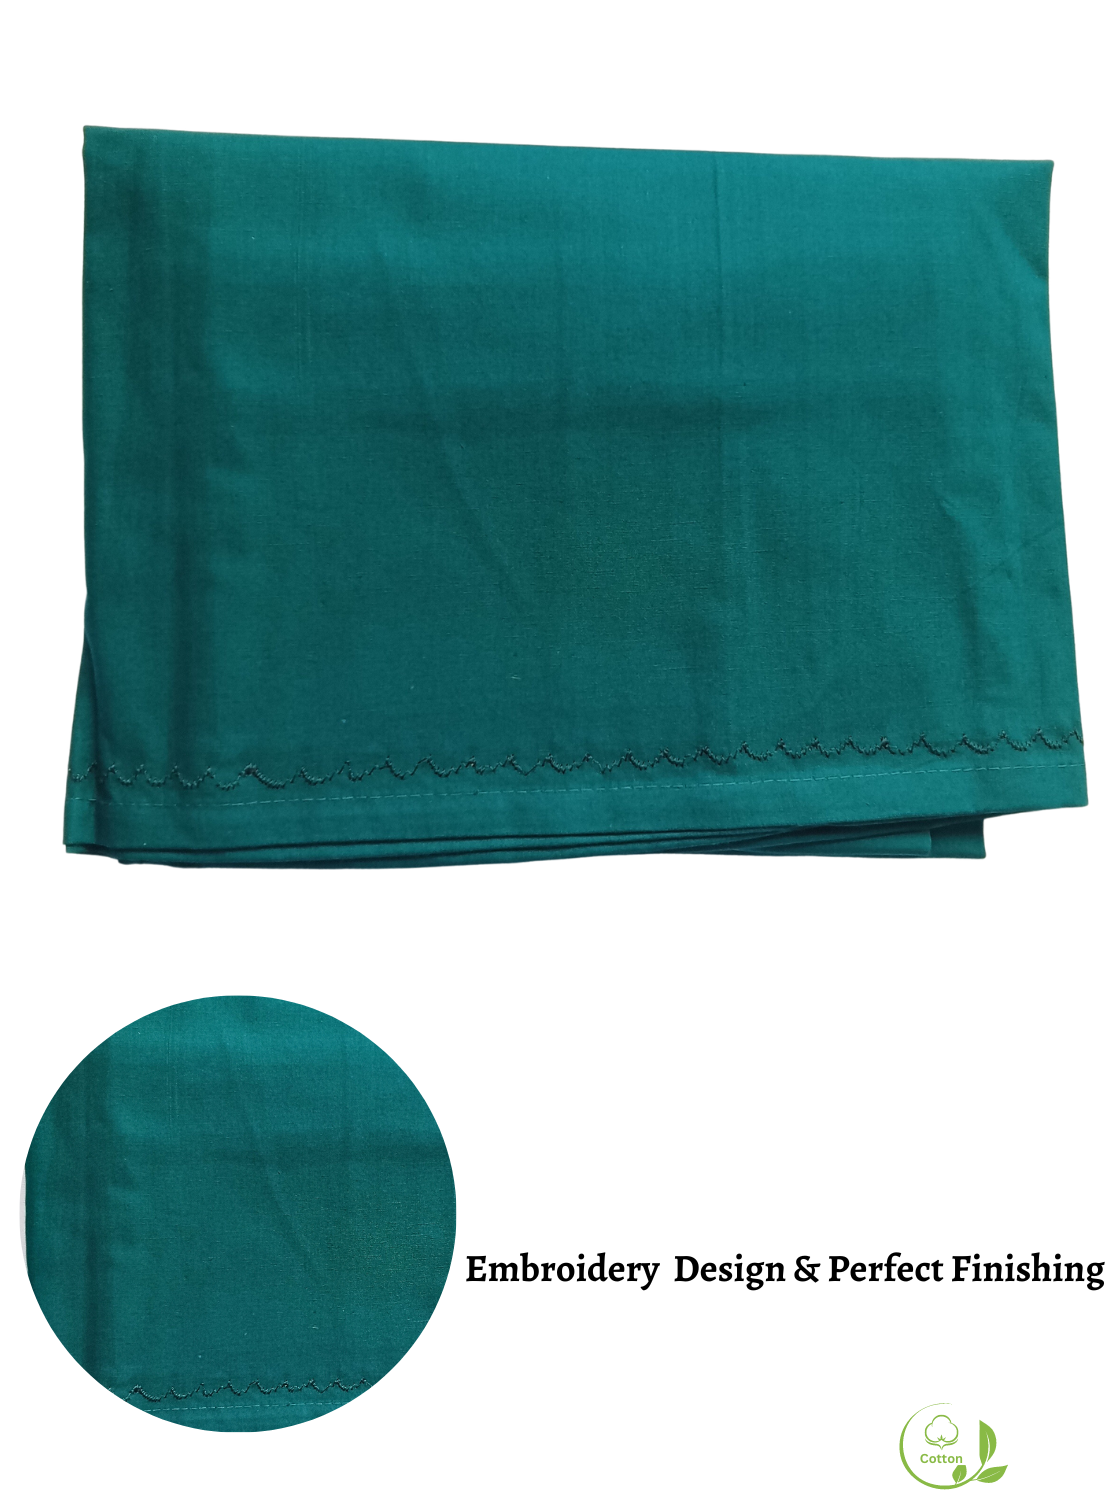 MANGAI Premium Embroidery Superior Cotton Petticoats - 8 Part Multiple Color's